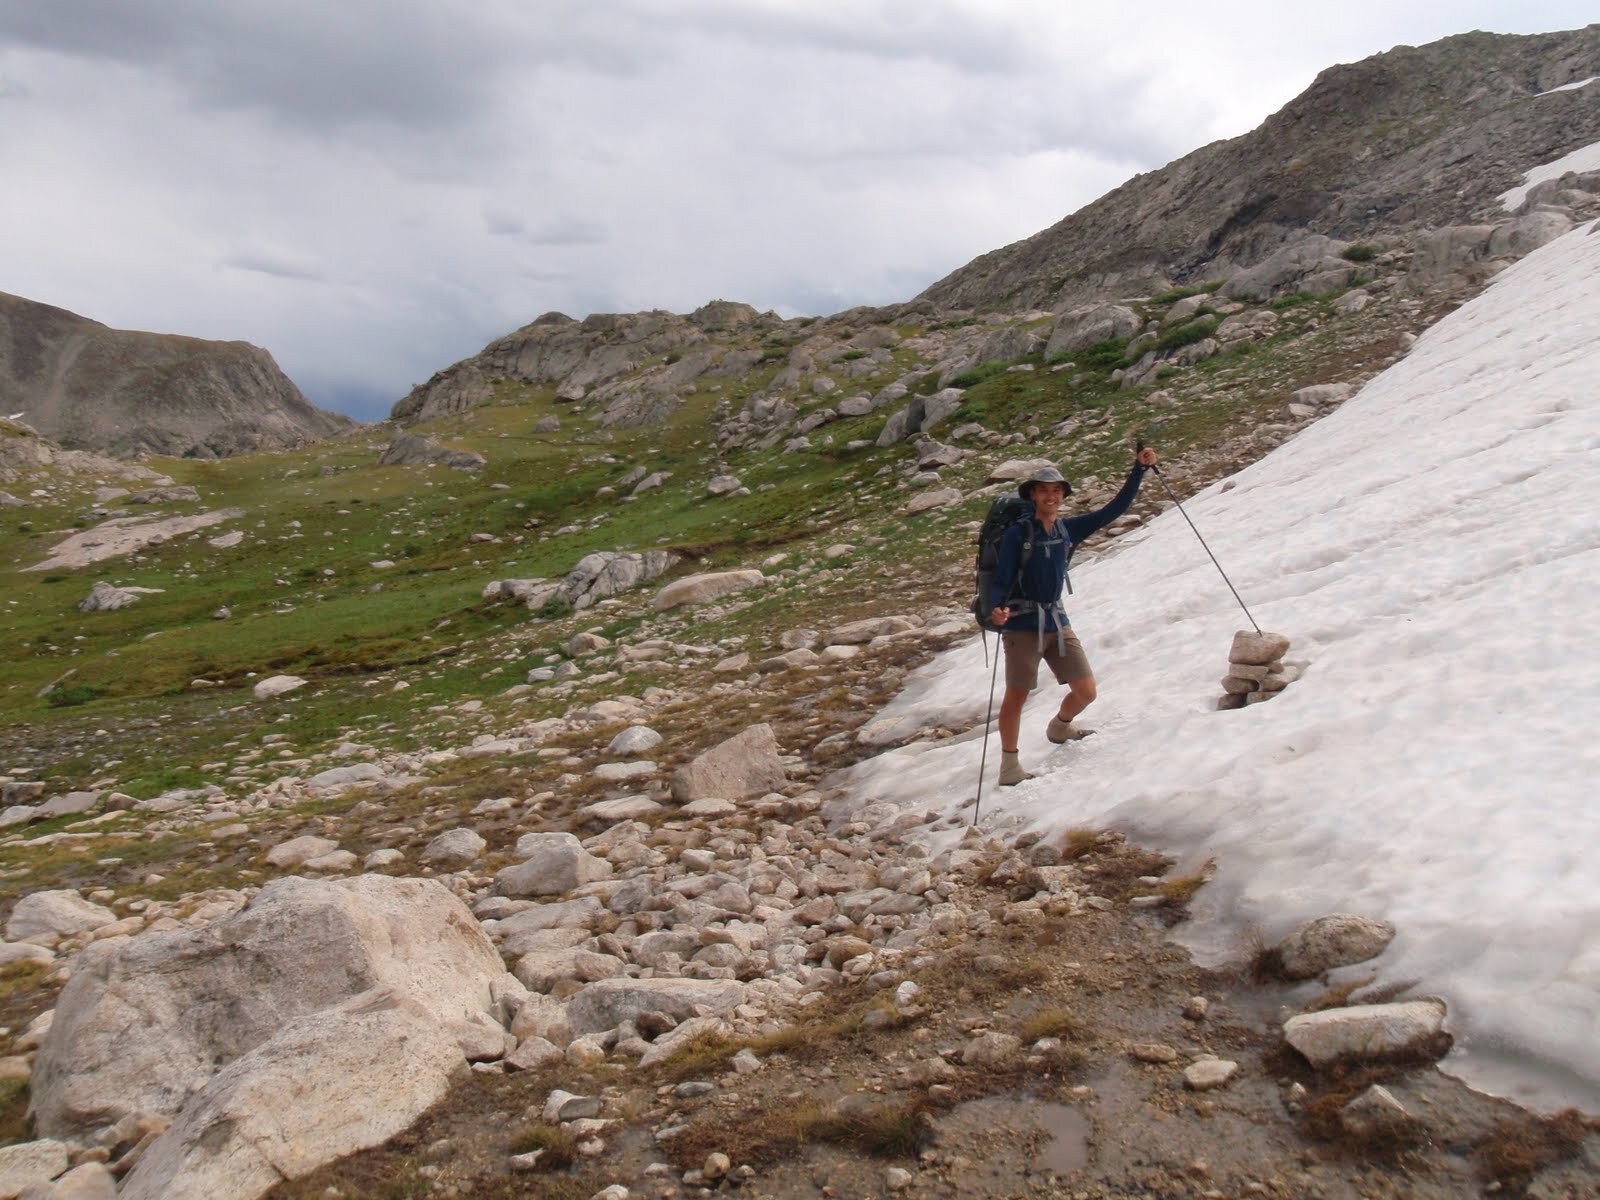 Snowbound cairn nearing Mt Baldy Pass